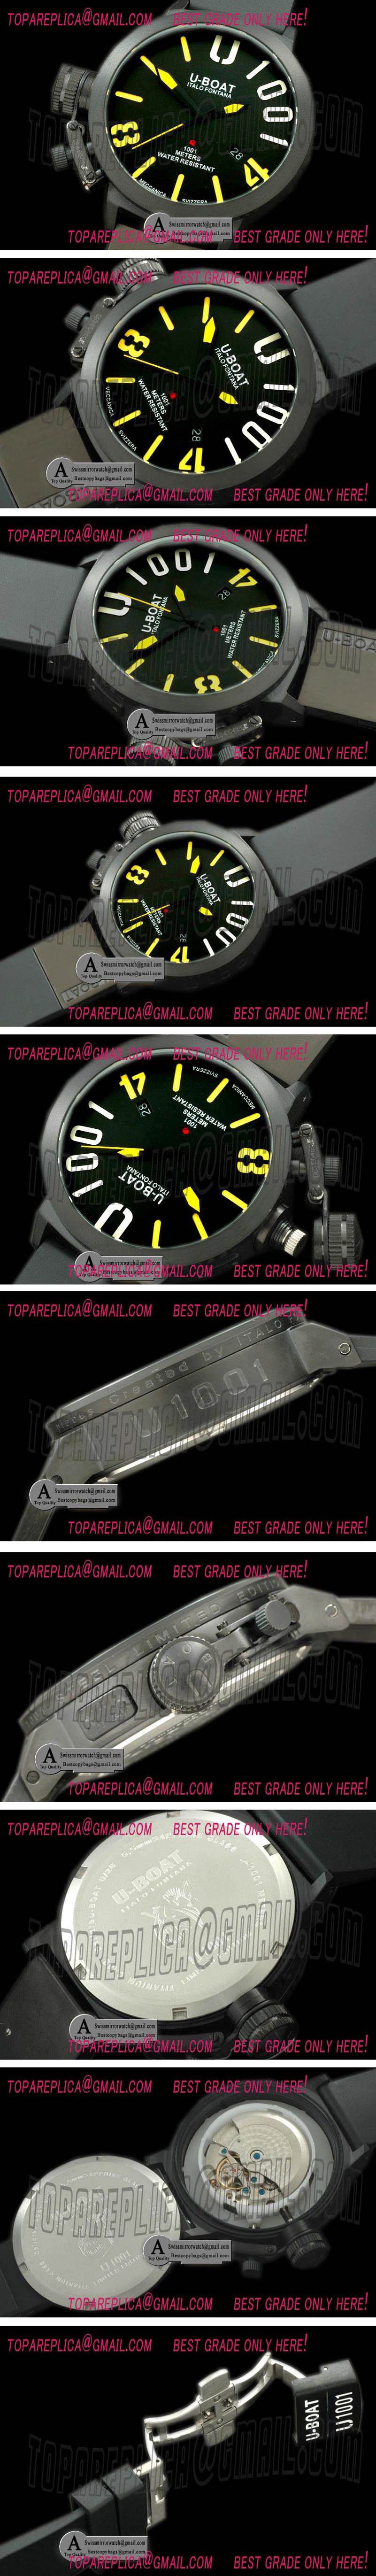 U-Boat Classico U1001 PVD/Rubber Black/Yellow Asian 2813 21J Replica Watches